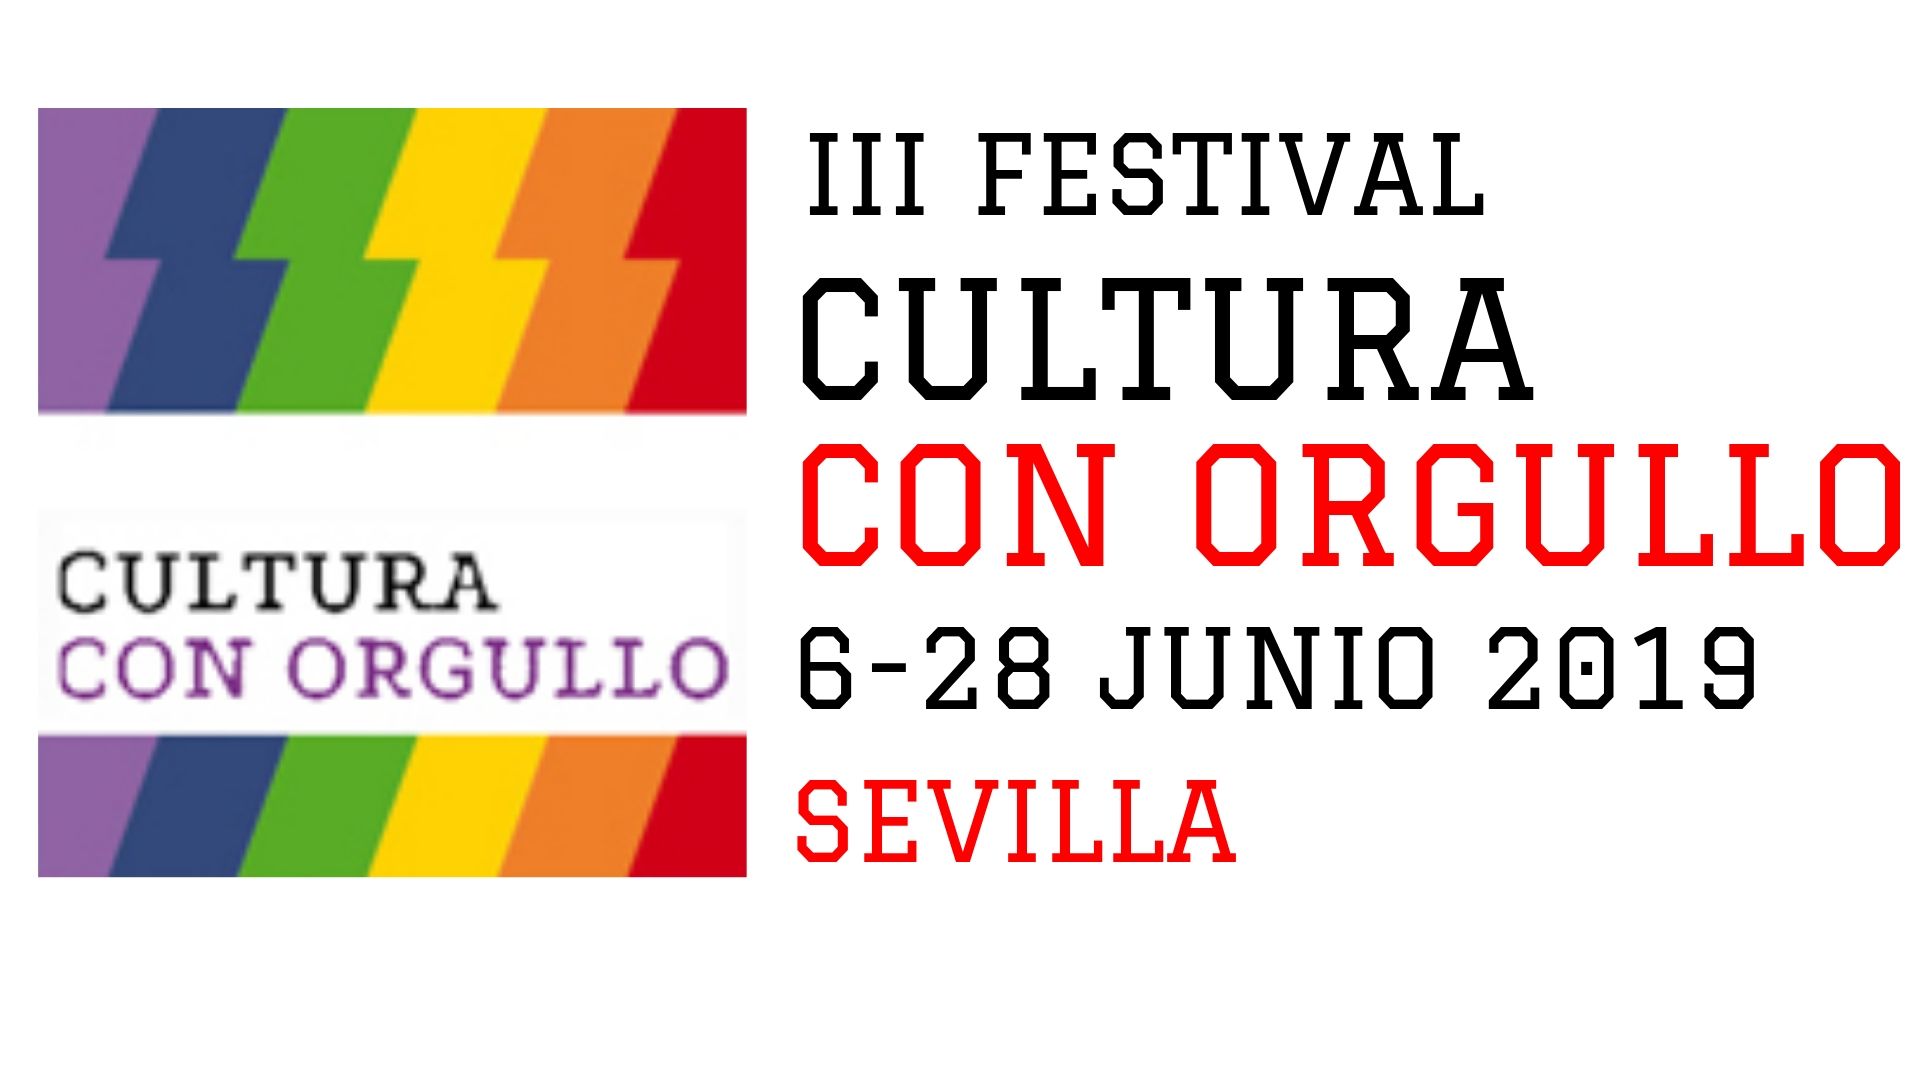 III Festival Cultura con Orgullo en Sevilla – Programación